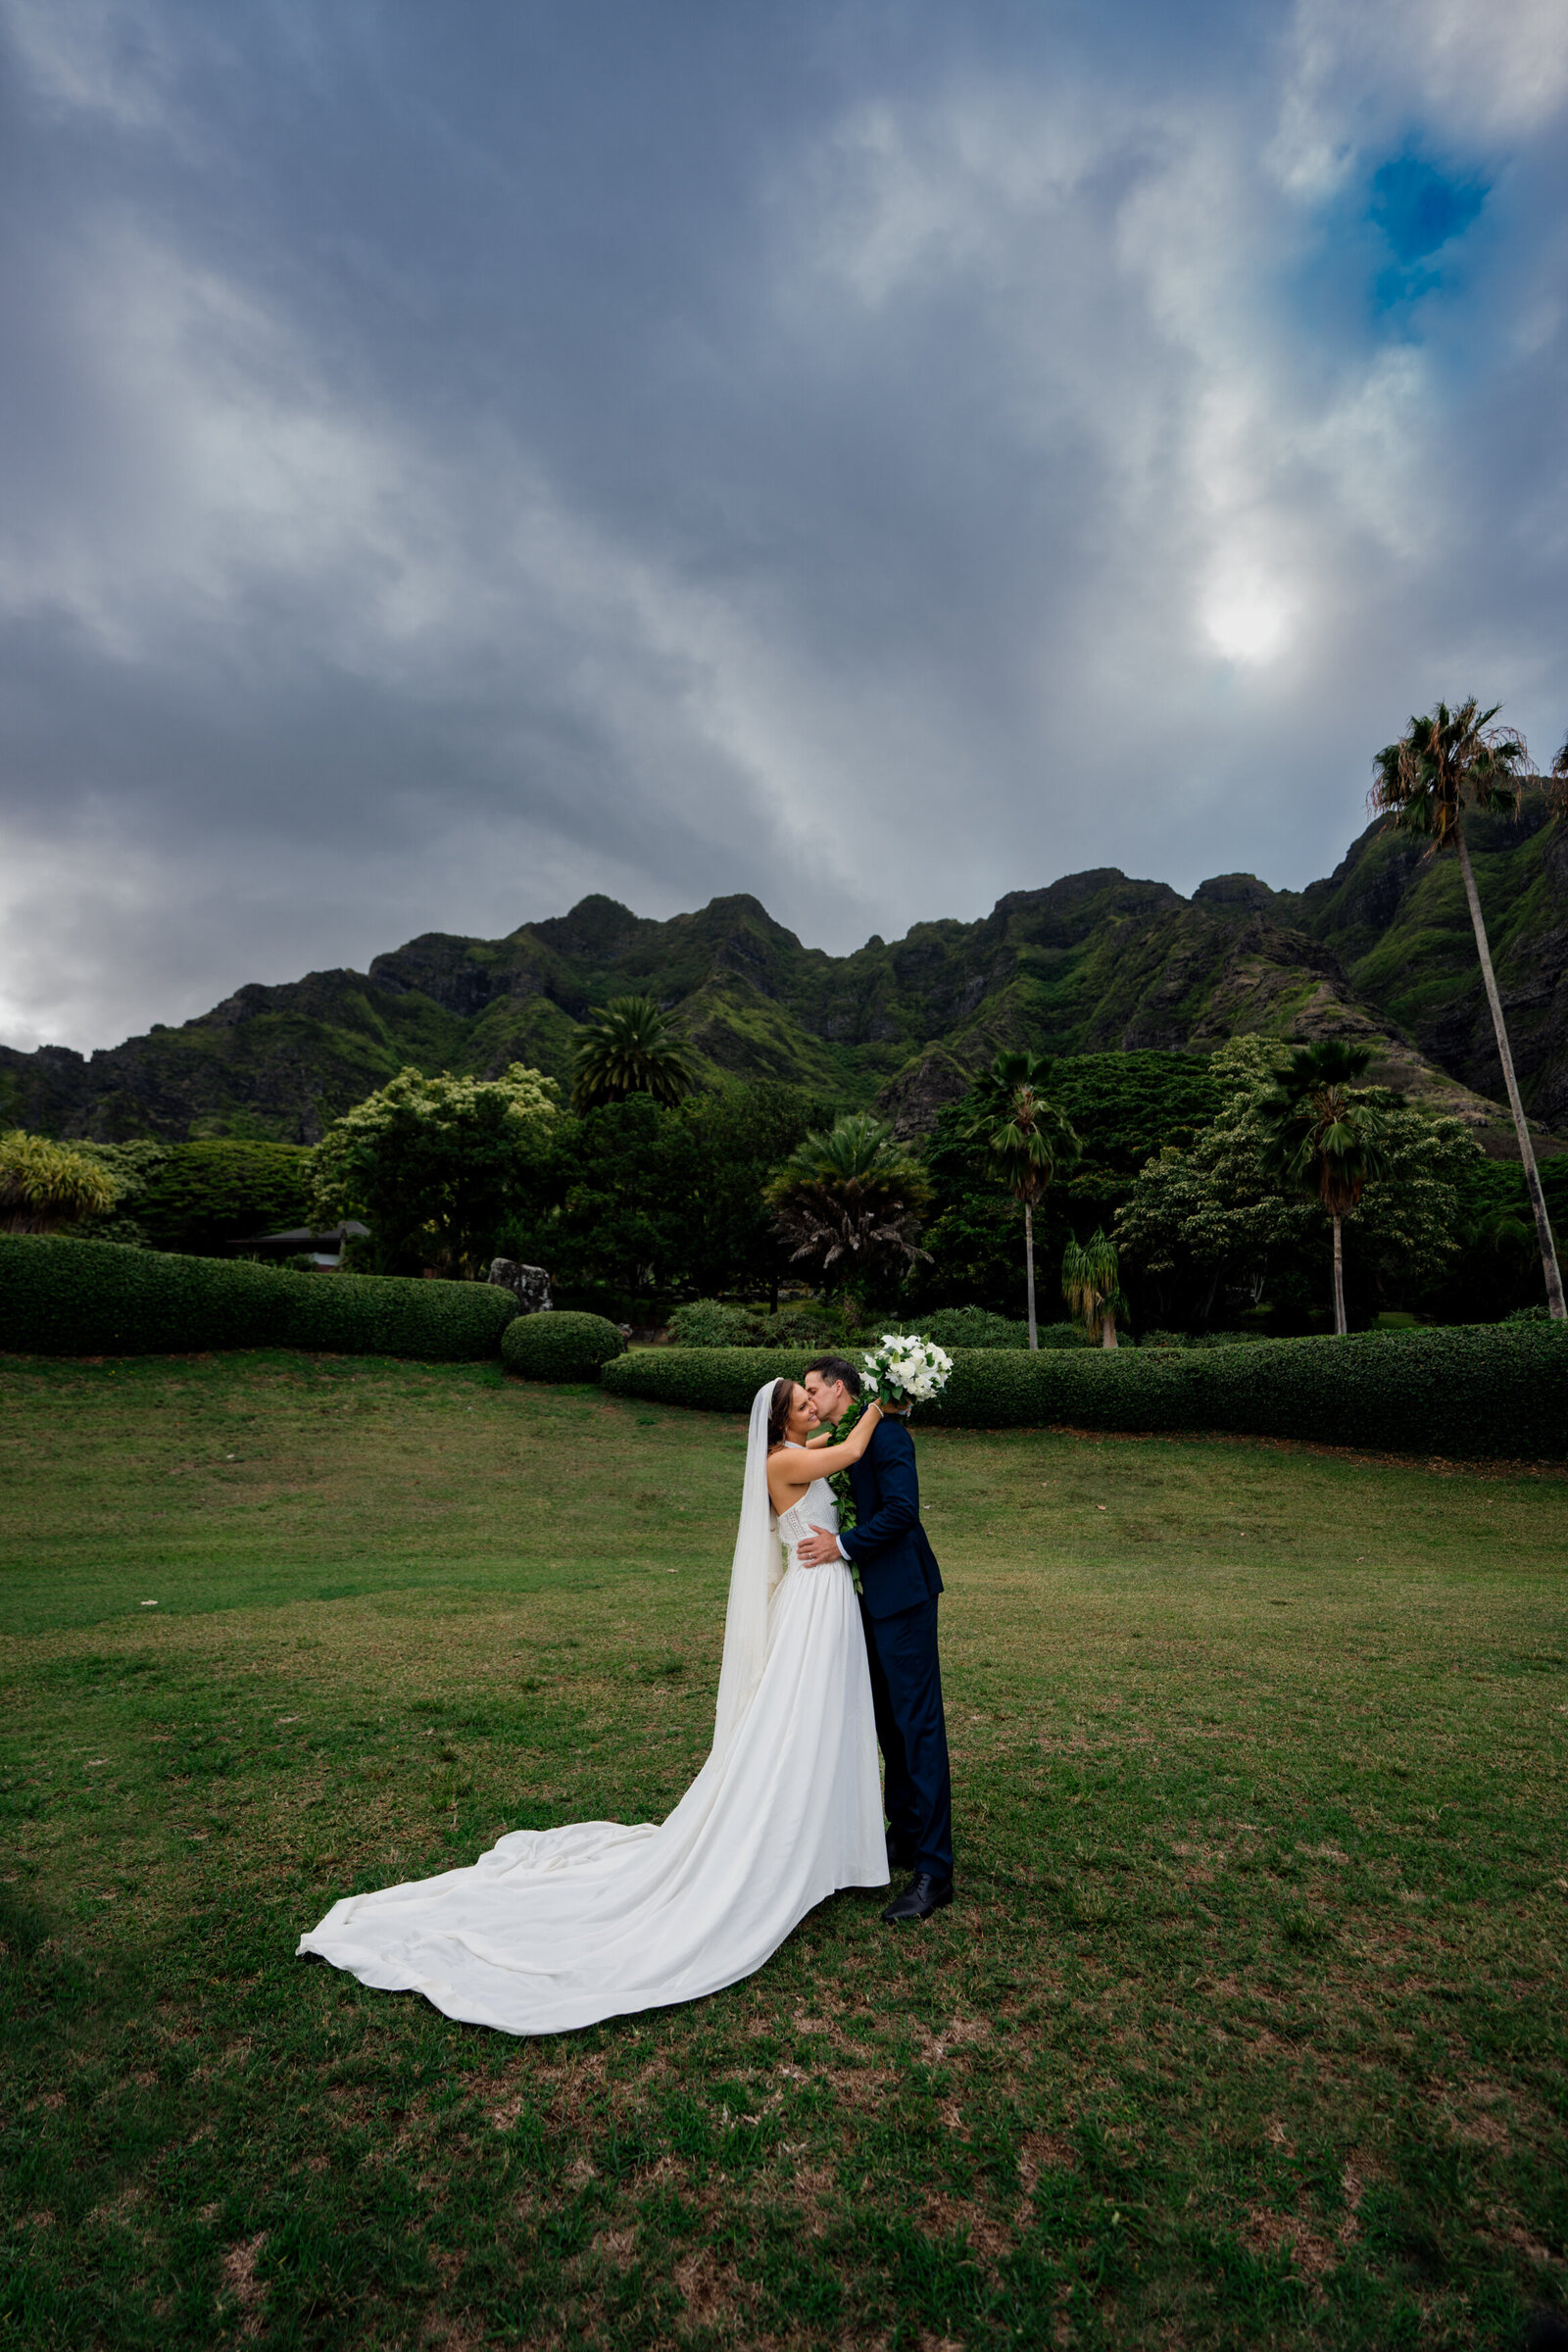 Aspen-Avenue-Millennium-Moments-Chicago-Wedding-Photograper-Hawaii-Pilialohaproductions-Kualoa-Ranch-Honolulu-Tropical-Vintage-Dress-FAV-135